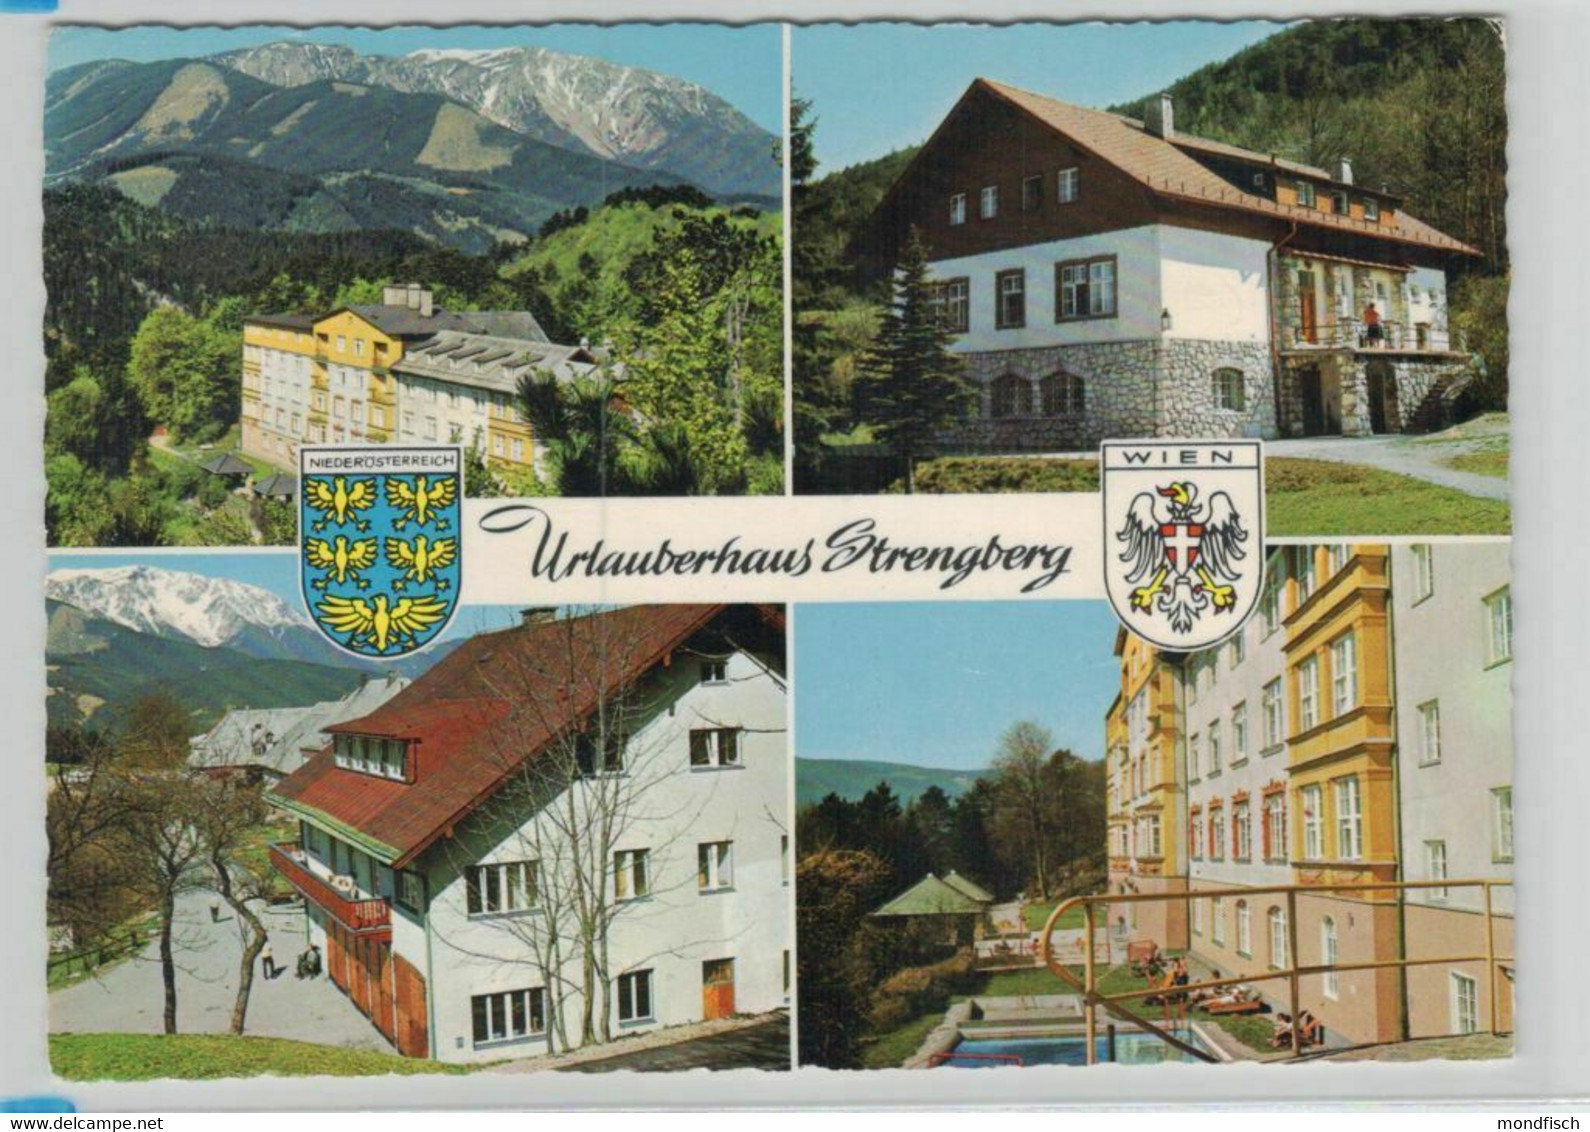 Puchberg Am Schneeberg - Urlauberhaus Strengberg - Schneeberggebiet